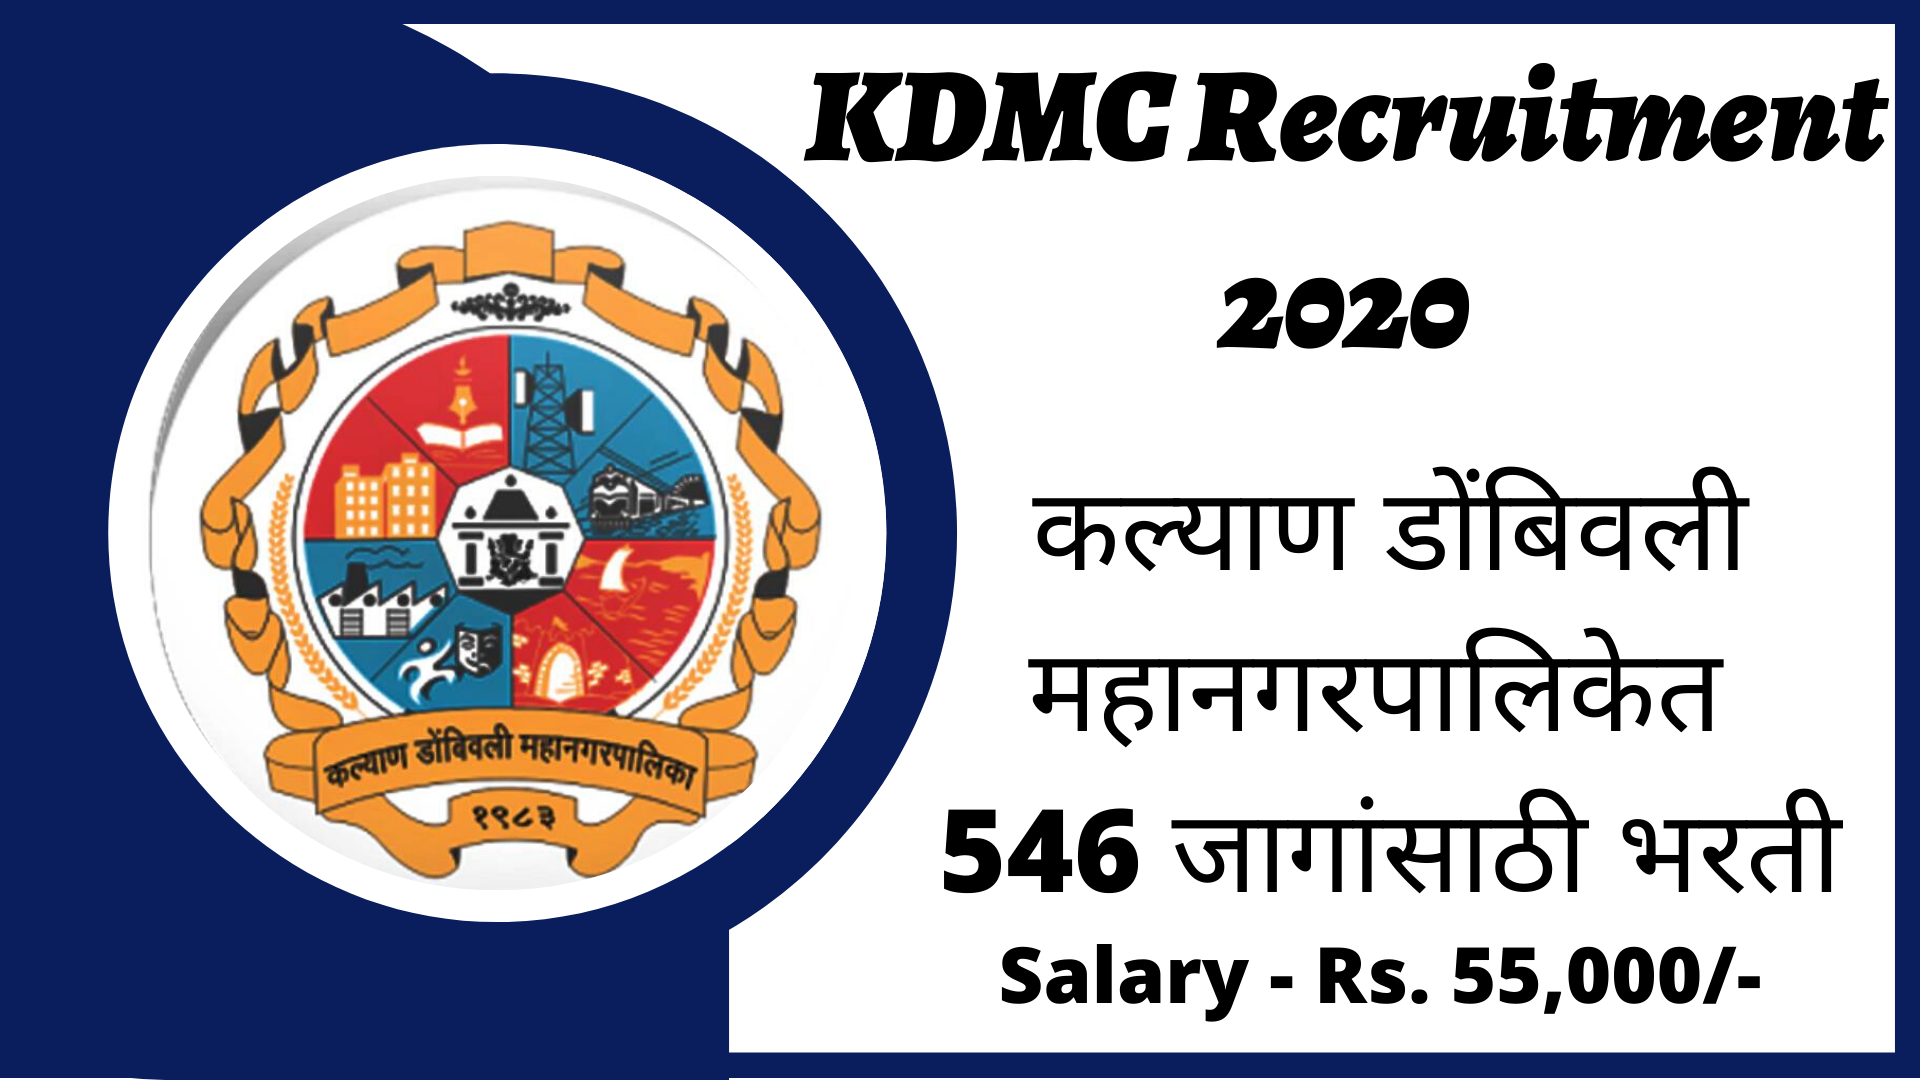 KDMC Recruitment 2020